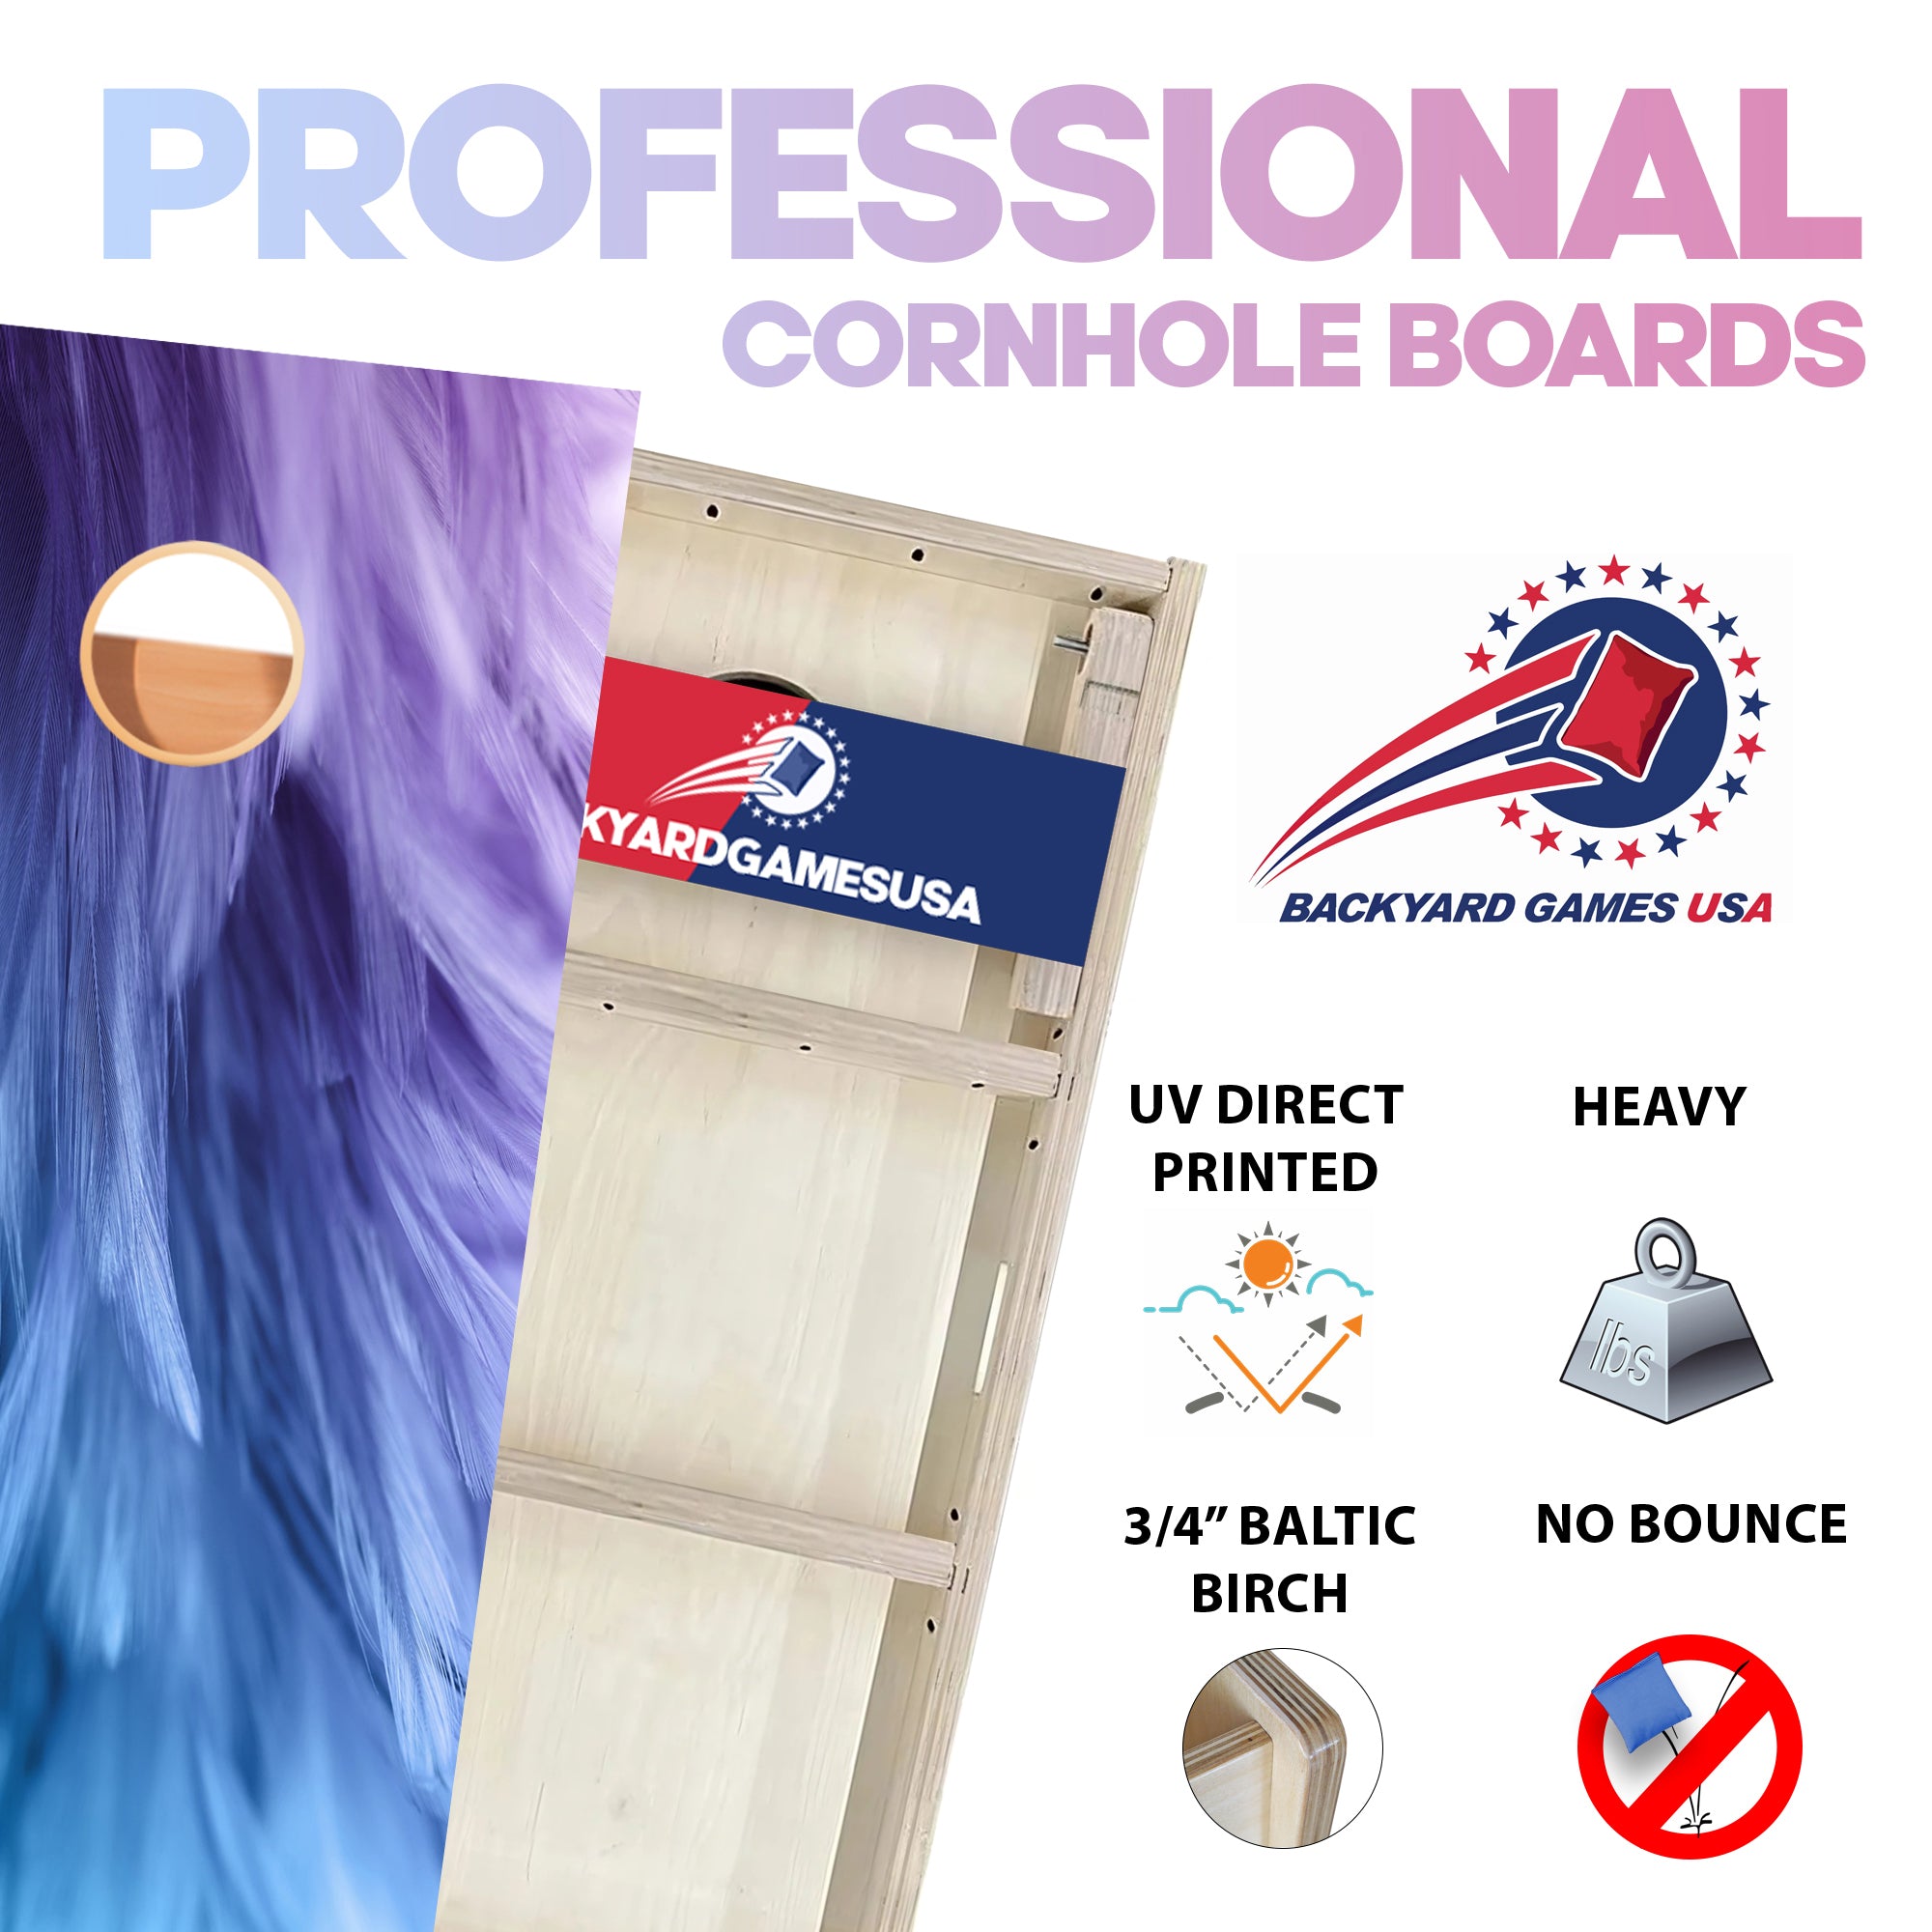 Purple Feathers Professional Cornhole Boards